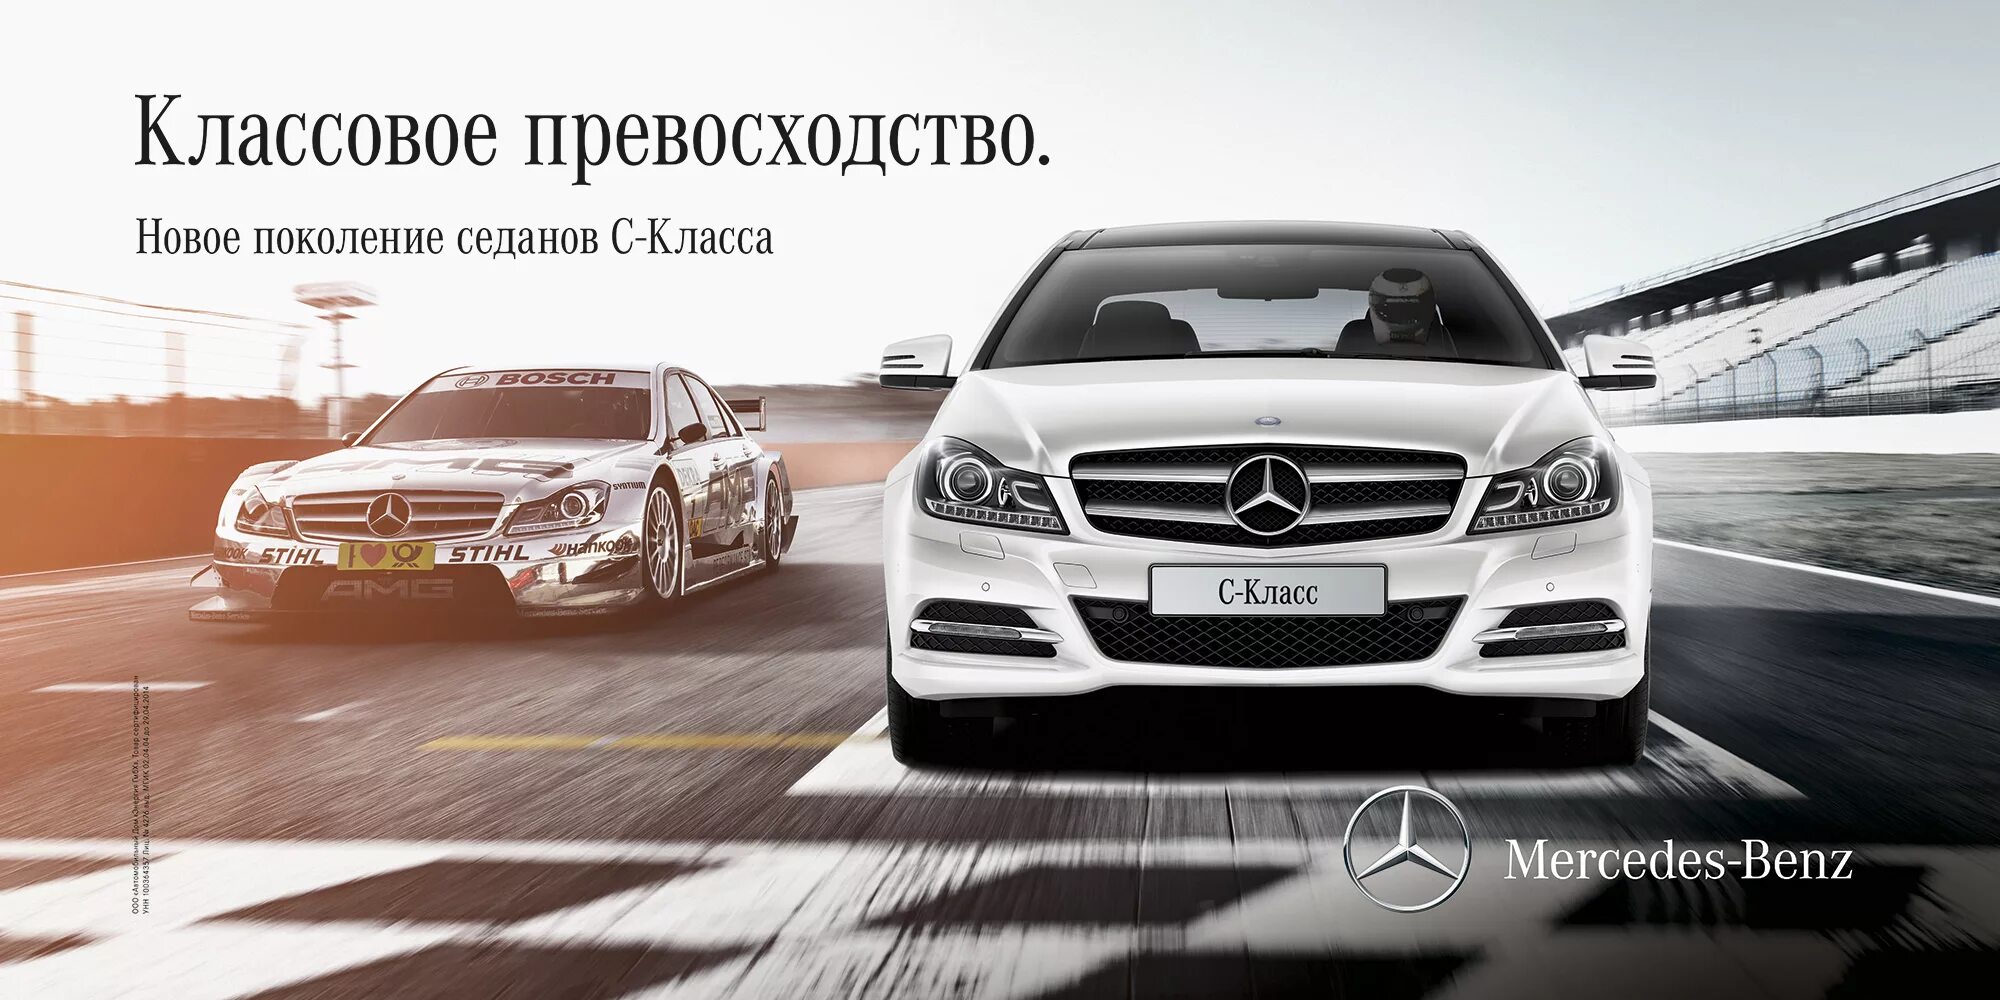 Реклама mercedes. Реклама Мерседес. Реклама автомобиля Мерседес. Реклама Mercedes Benz. Баннер Мерседес.